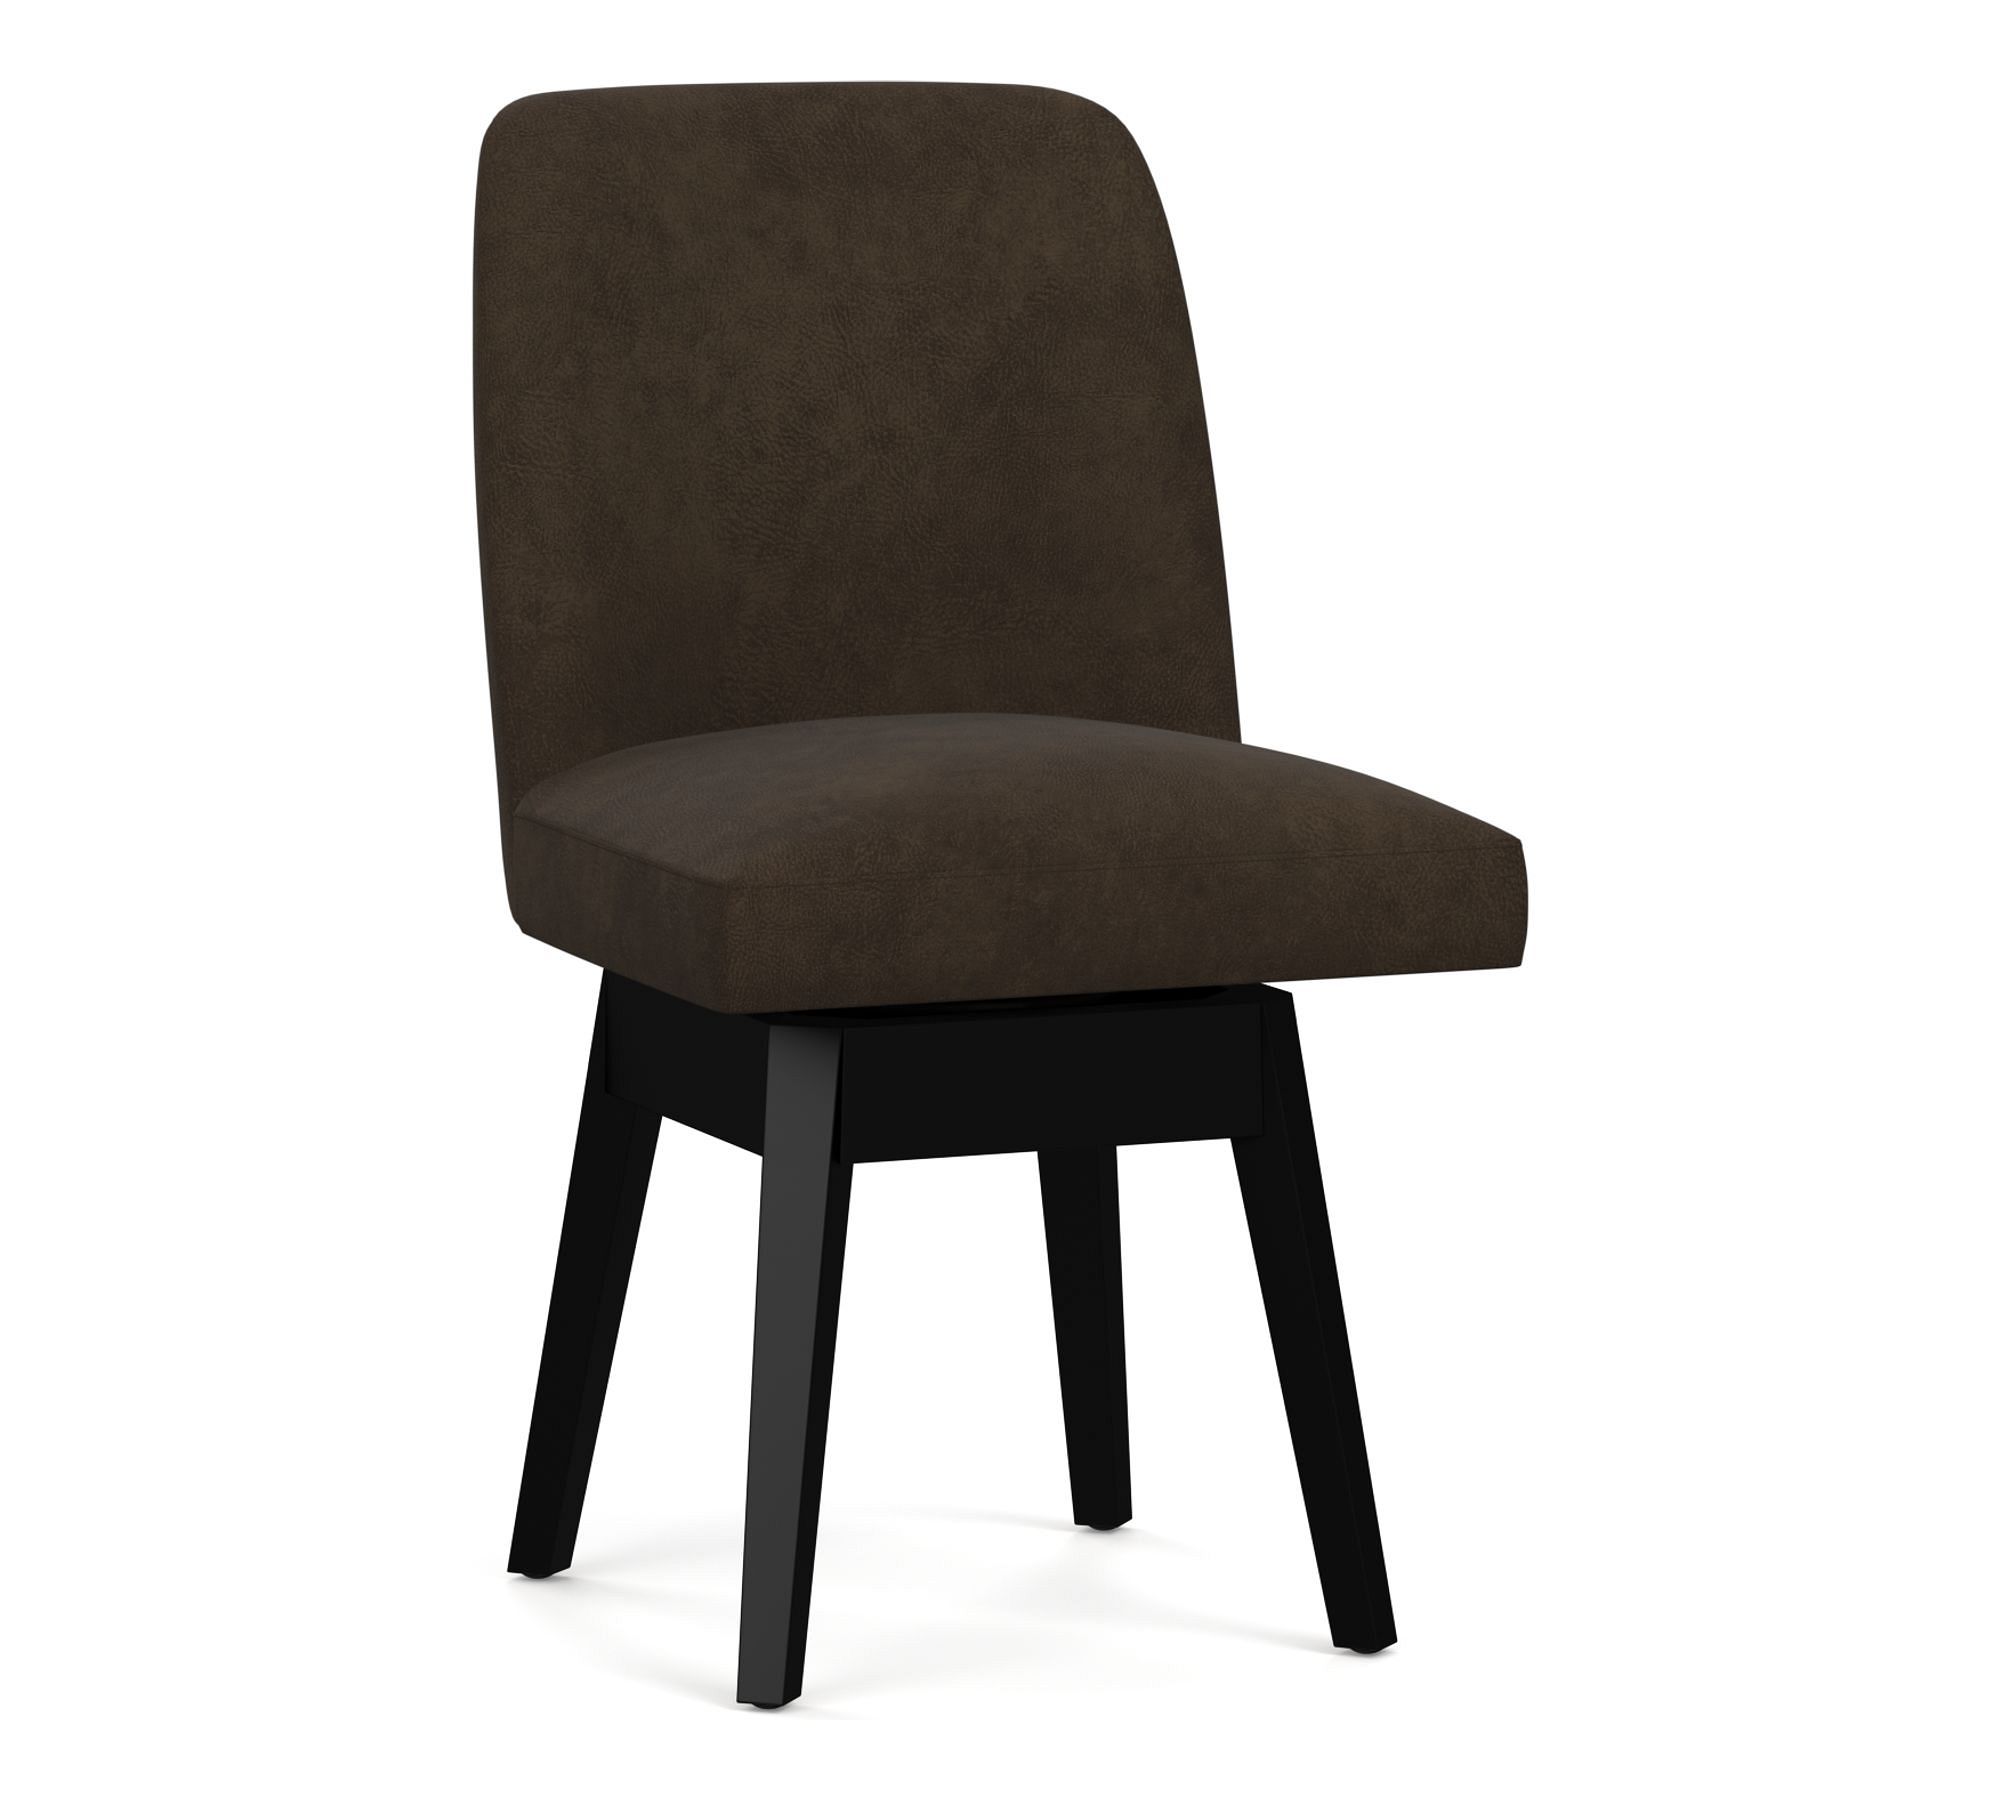 Layton Leather Swivel Desk Chair